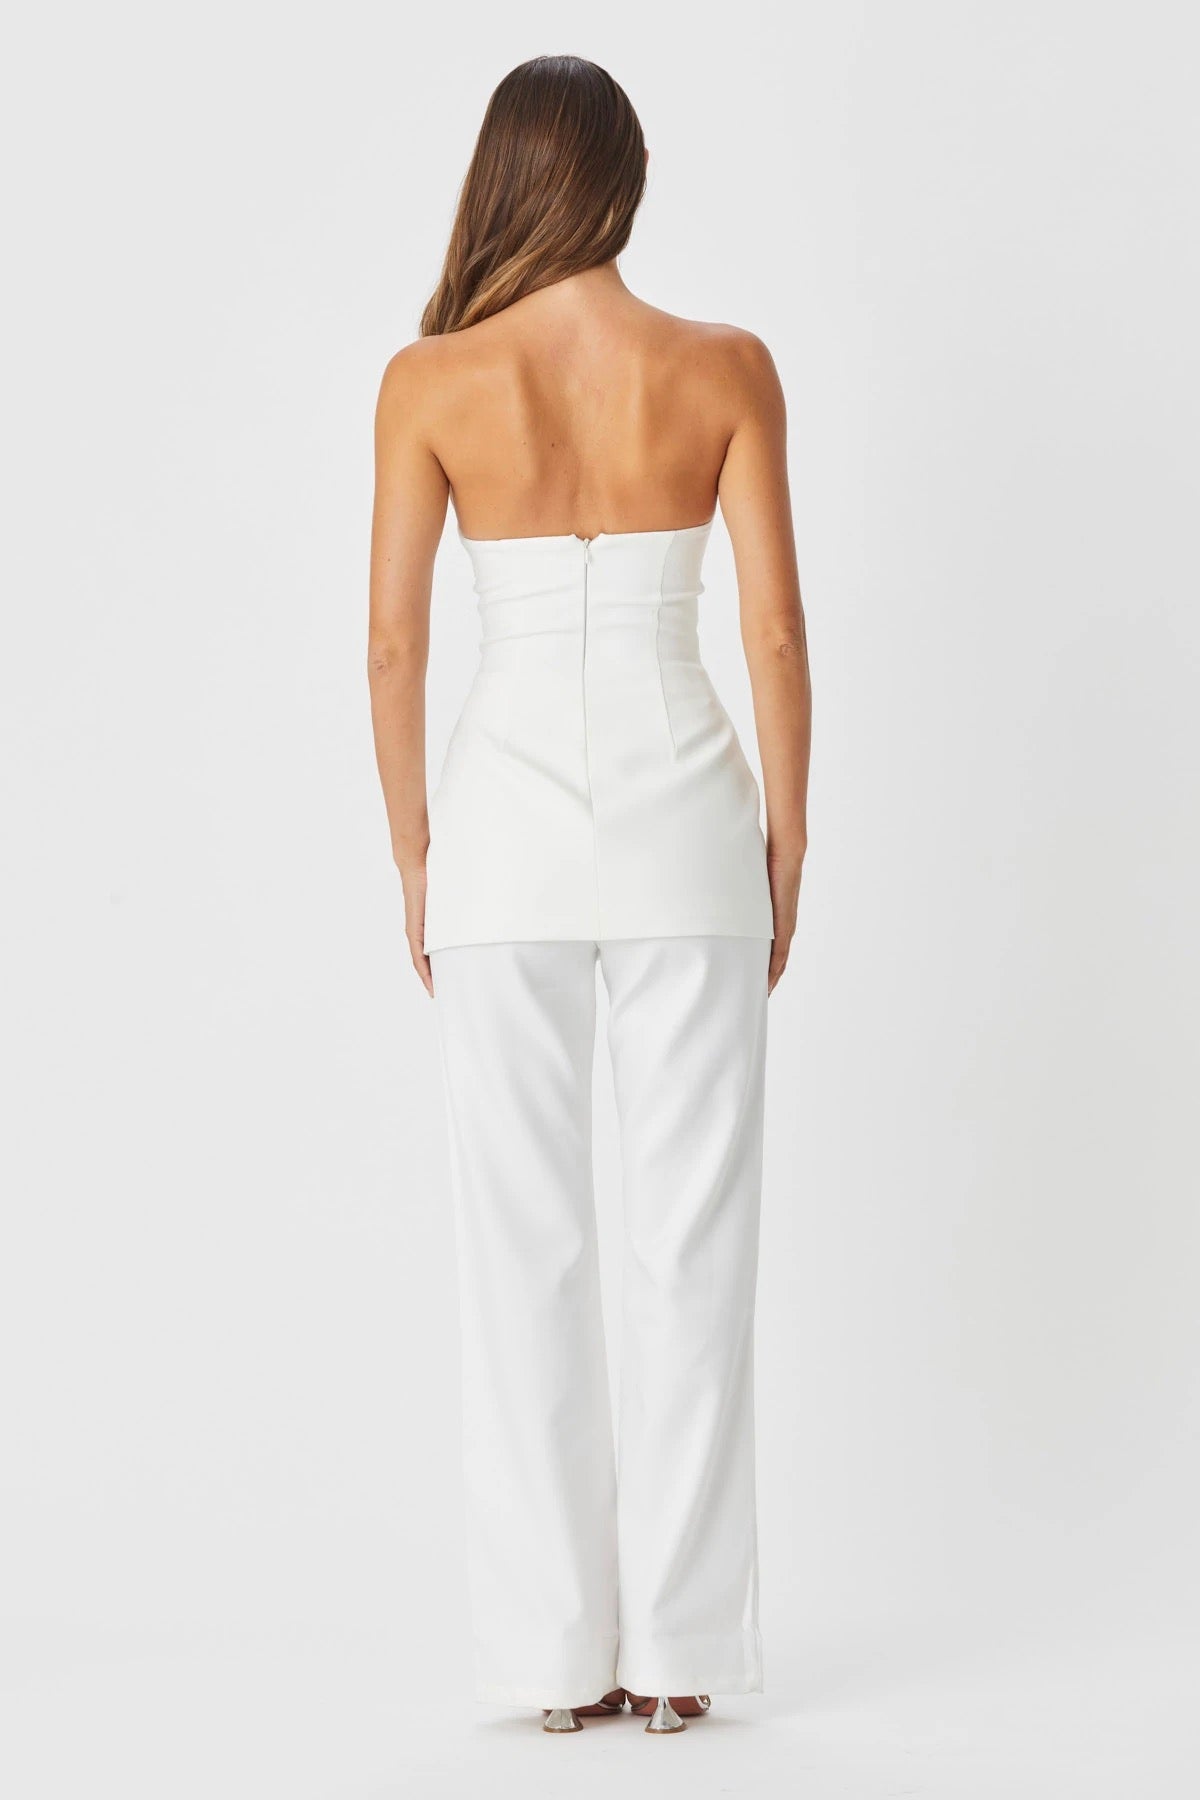 Bianca & Bridgett Iris Top - White – Dress Hire AU